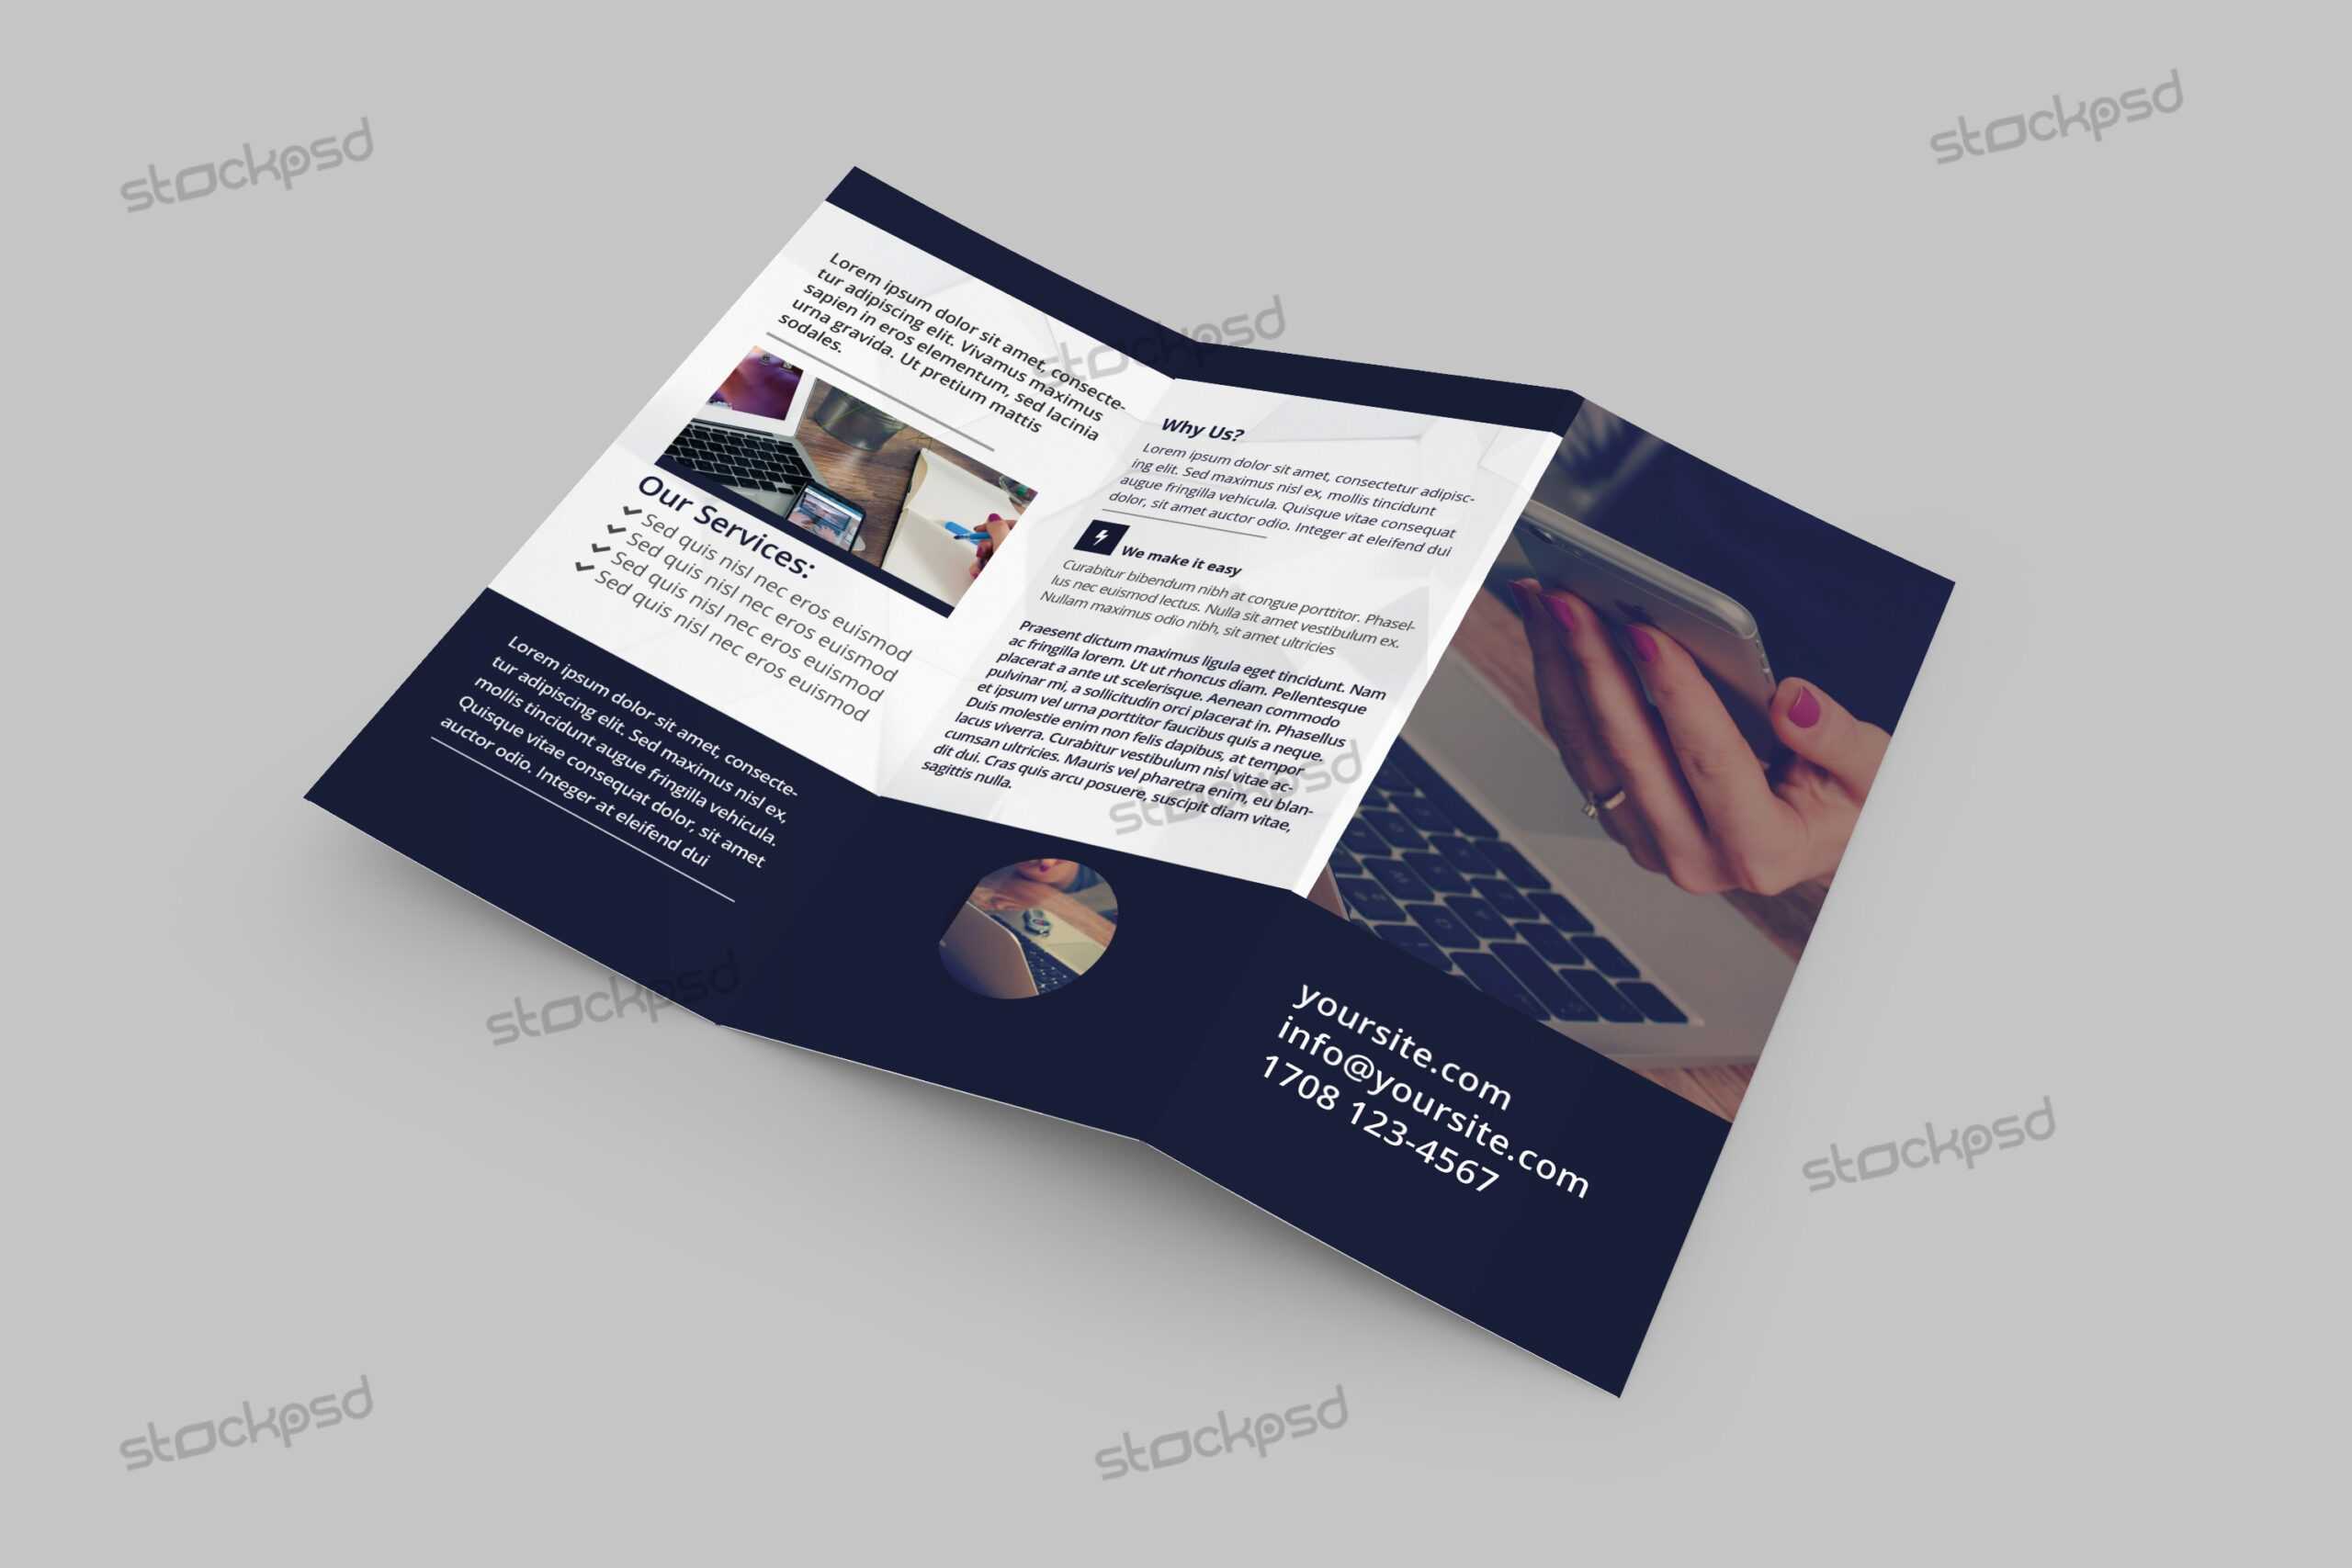 Tri Fold Corporate Brochure – Free Psd Template – Stockpsd For Brochure 3 Fold Template Psd